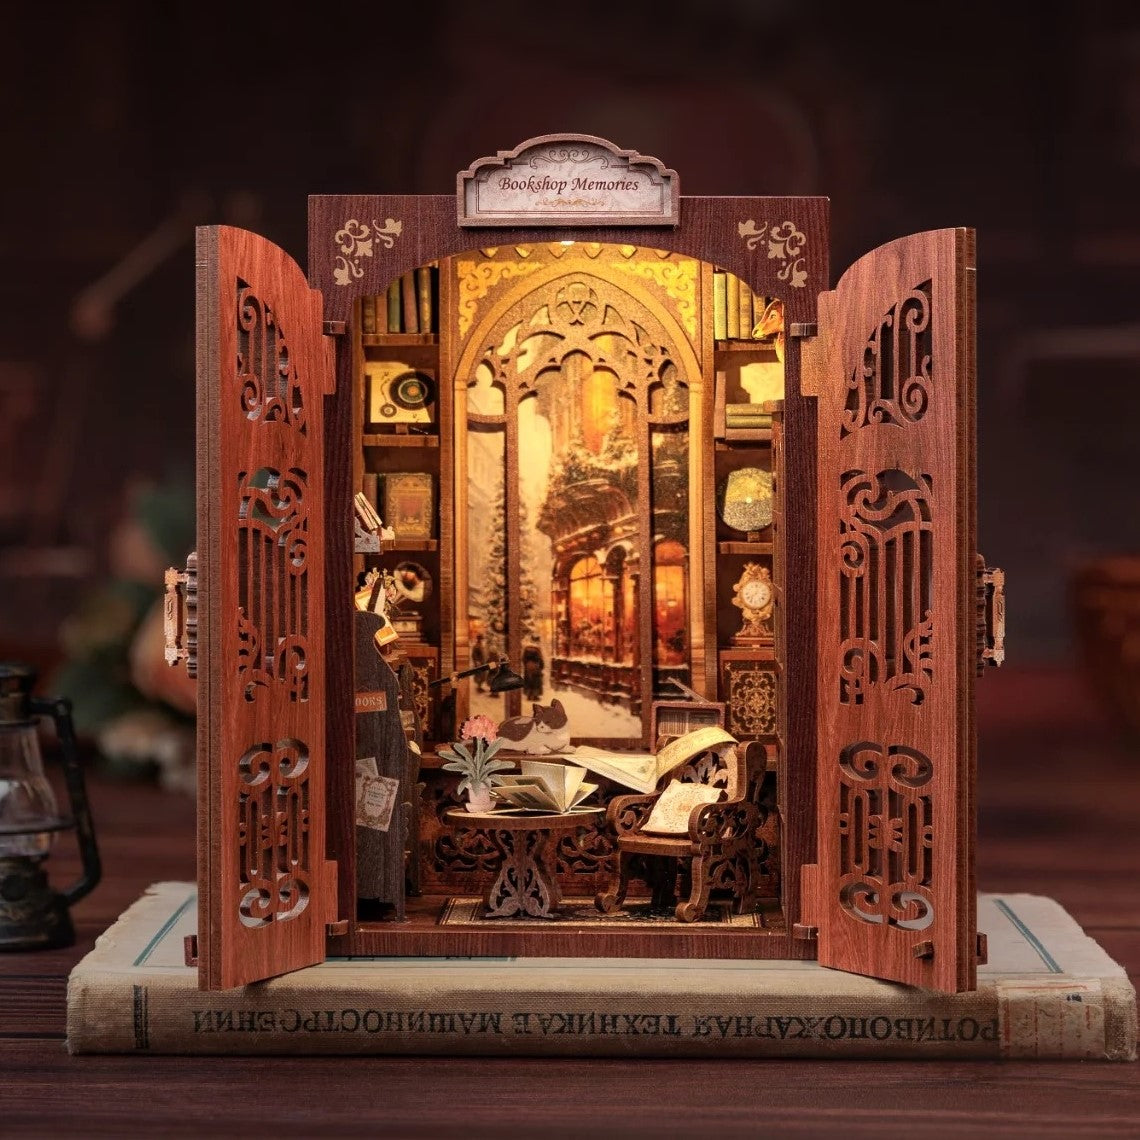 Bookshop Memories DIY Book Nook Kit, Bookstore theme bookshelf insert decor diorama, 3D Wooden puzzles bookend, miniature house crafts - night time view